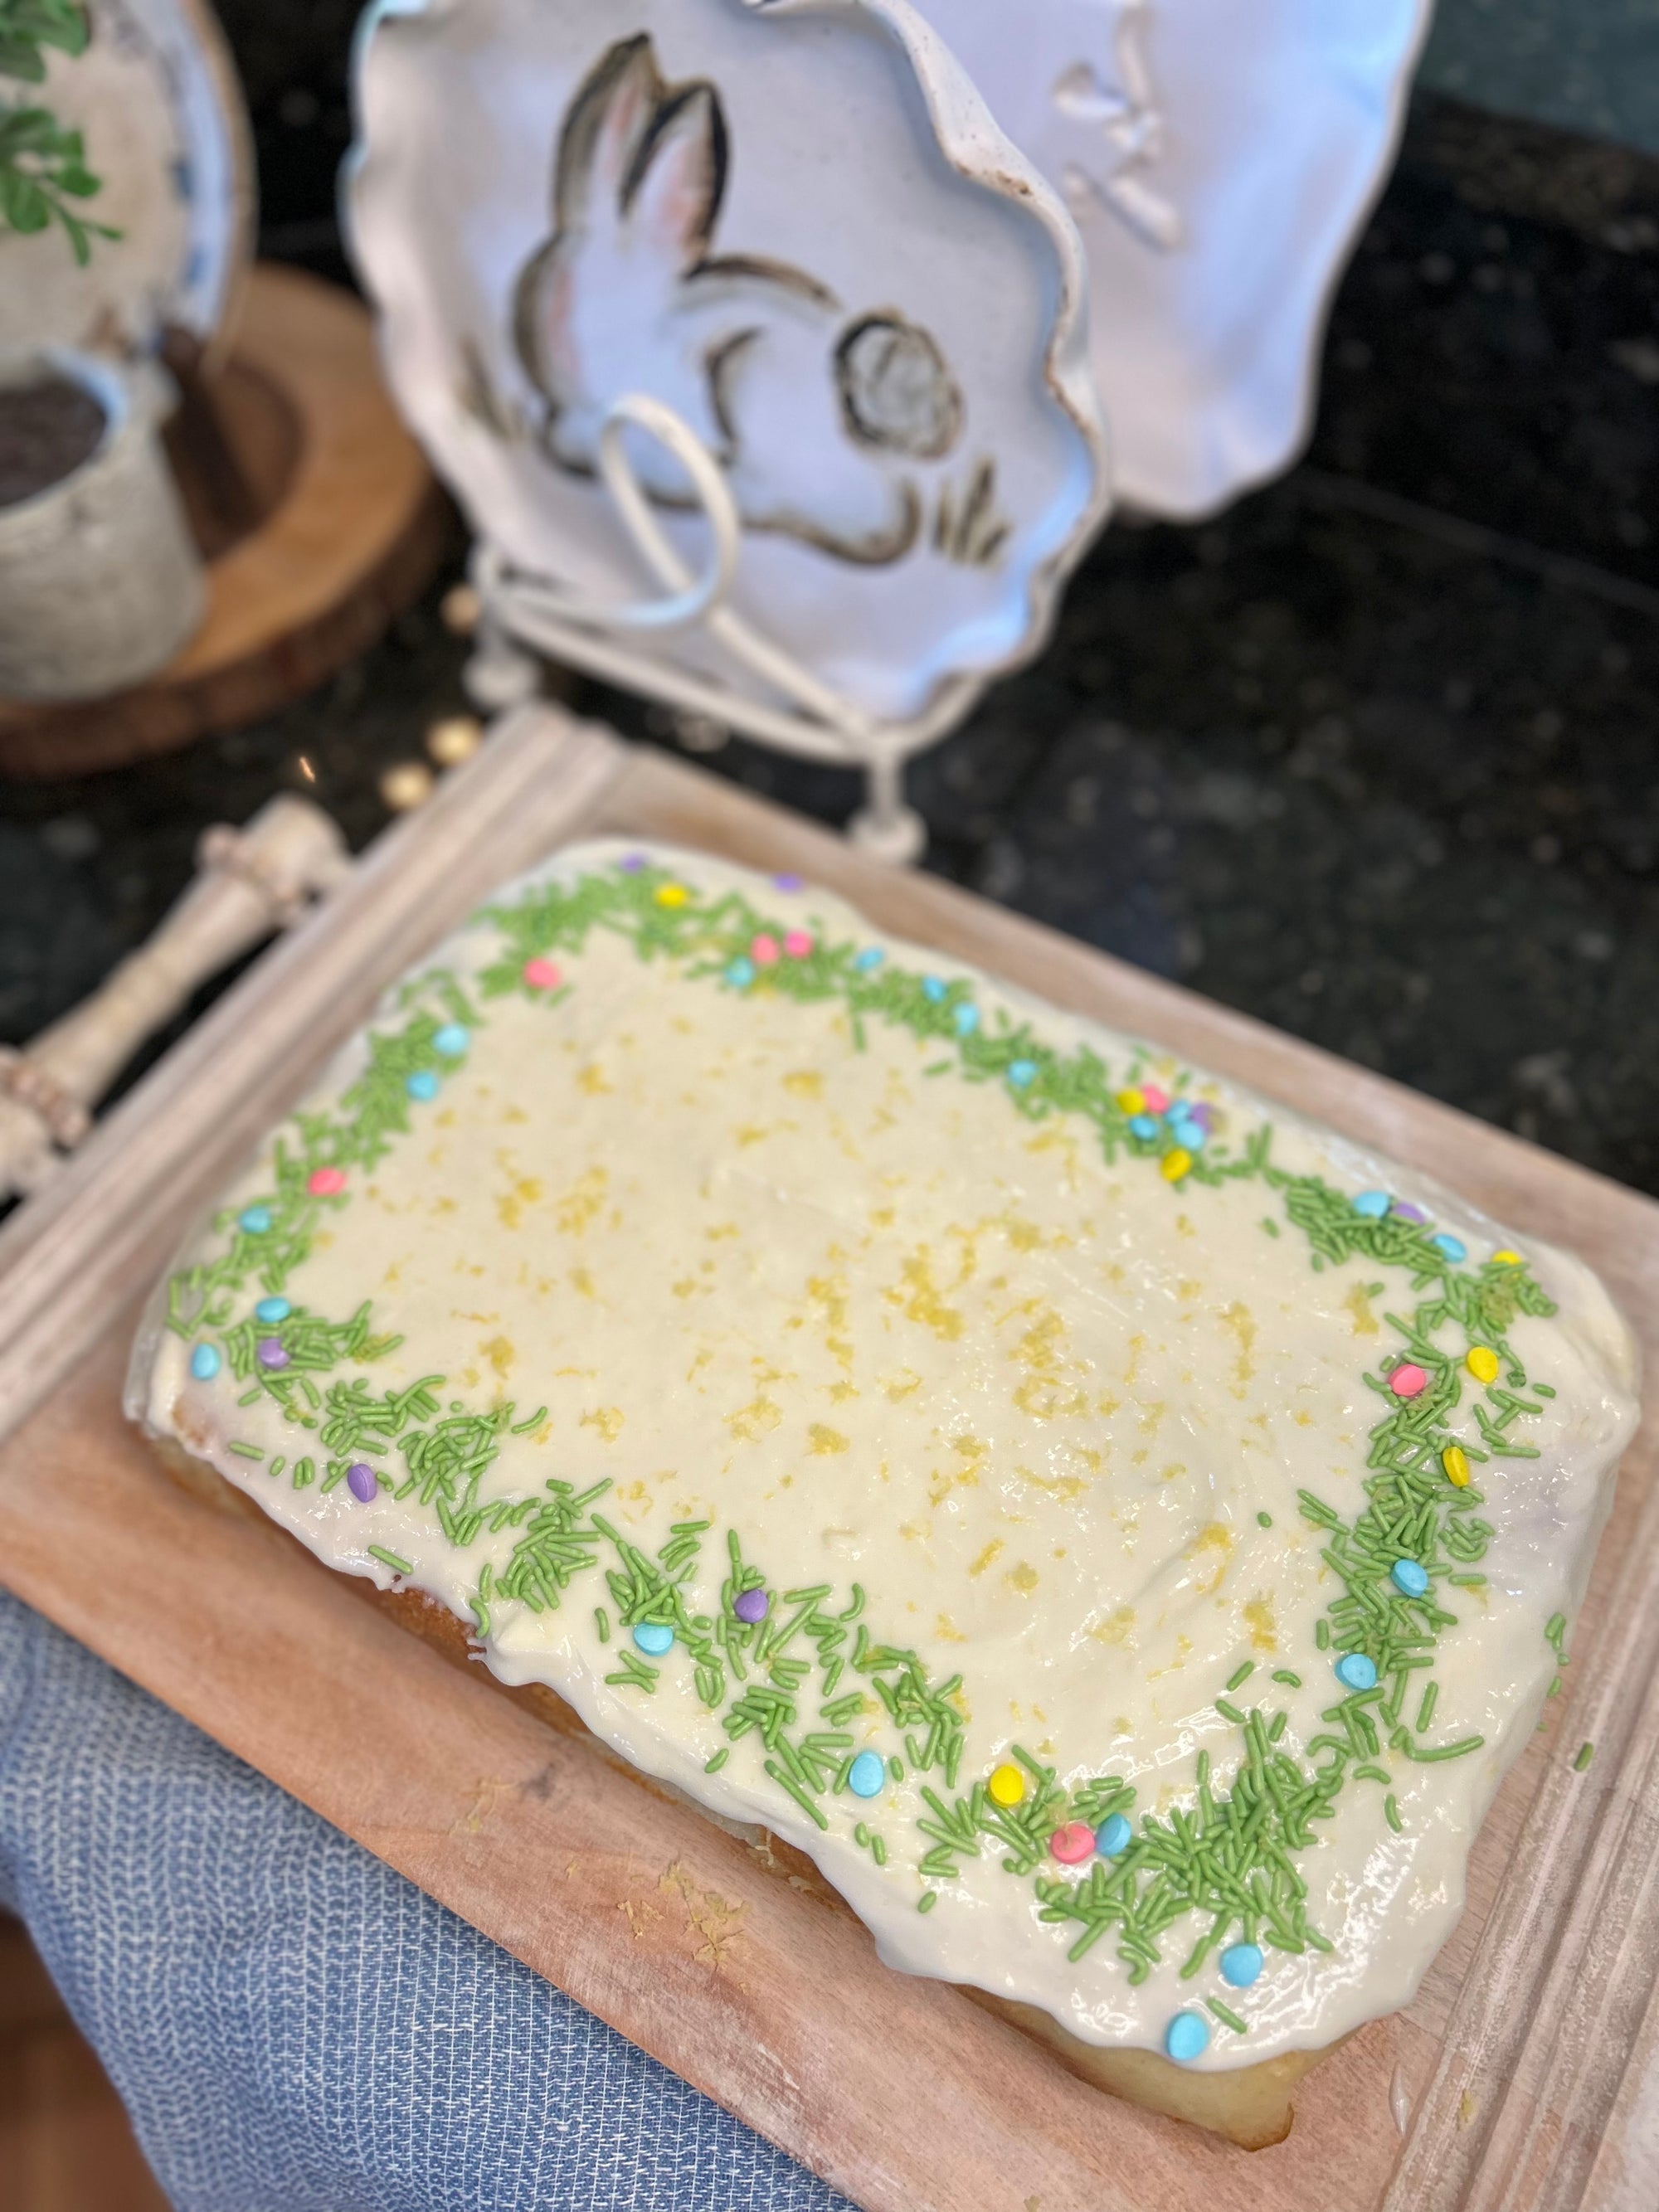 Lemon Sheet Cake